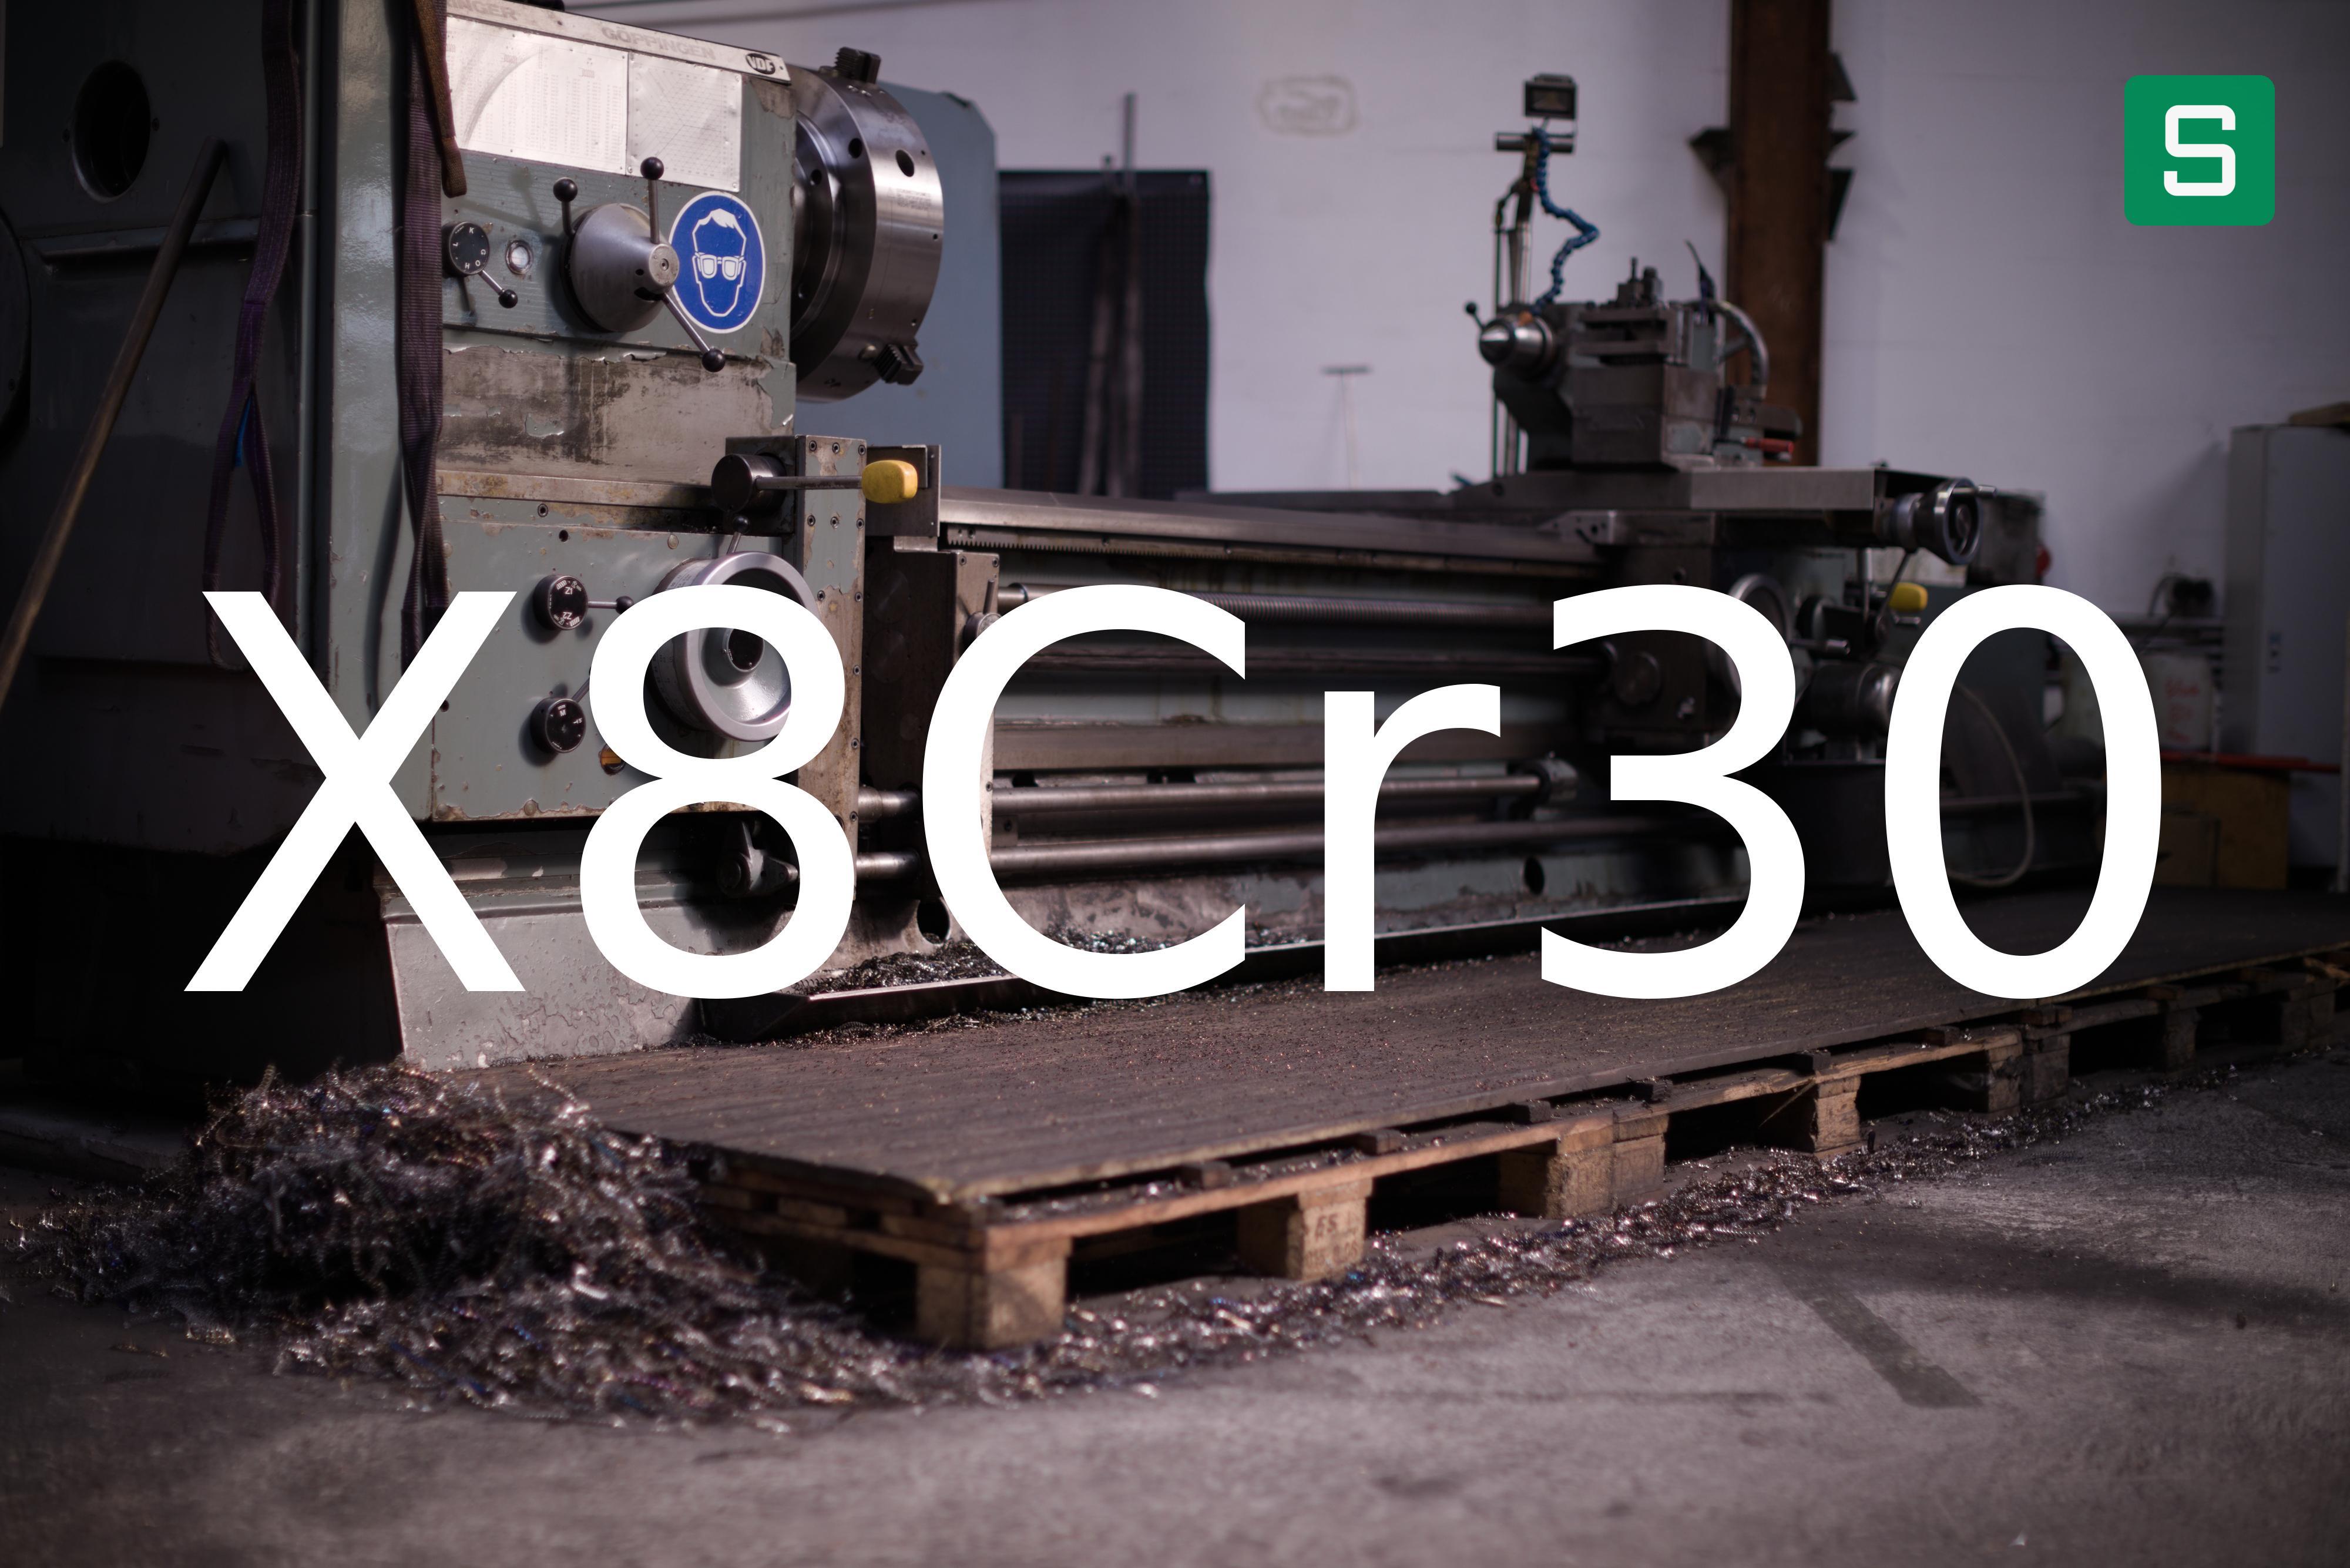 Material de Acero: X8Cr30